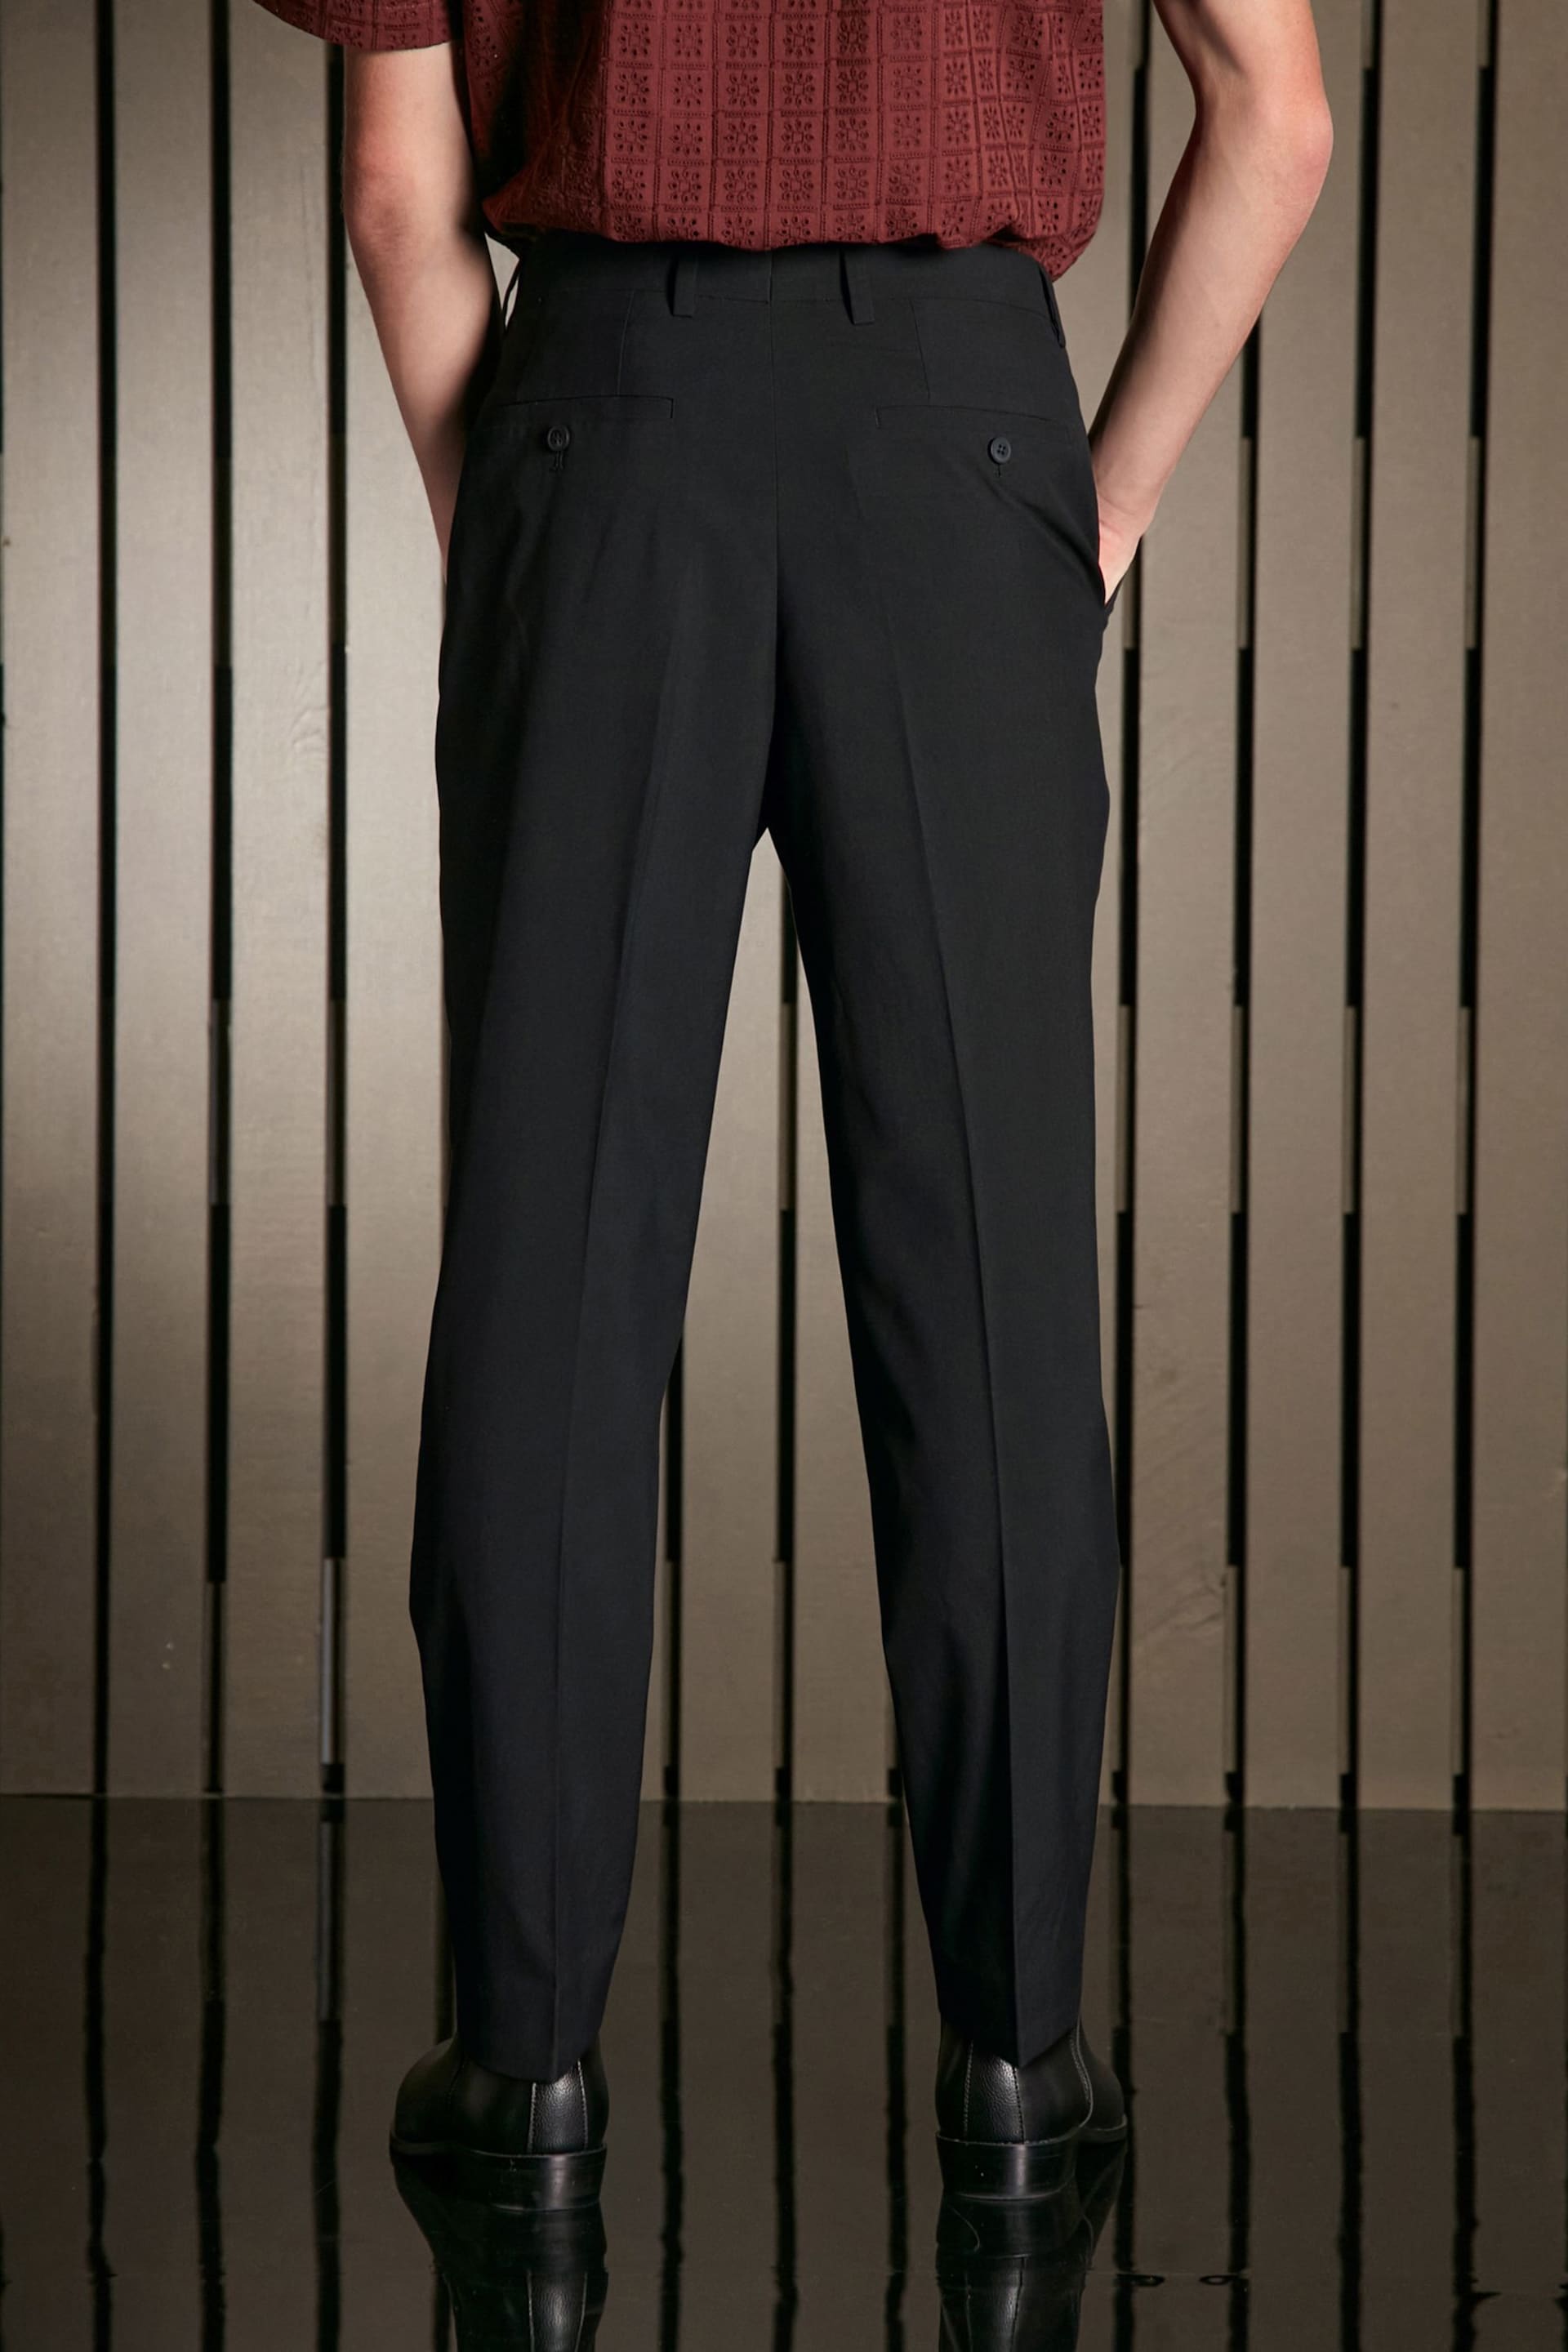 Black EDIT Oversized Tuxedo Suit Trousers - Image 2 of 9